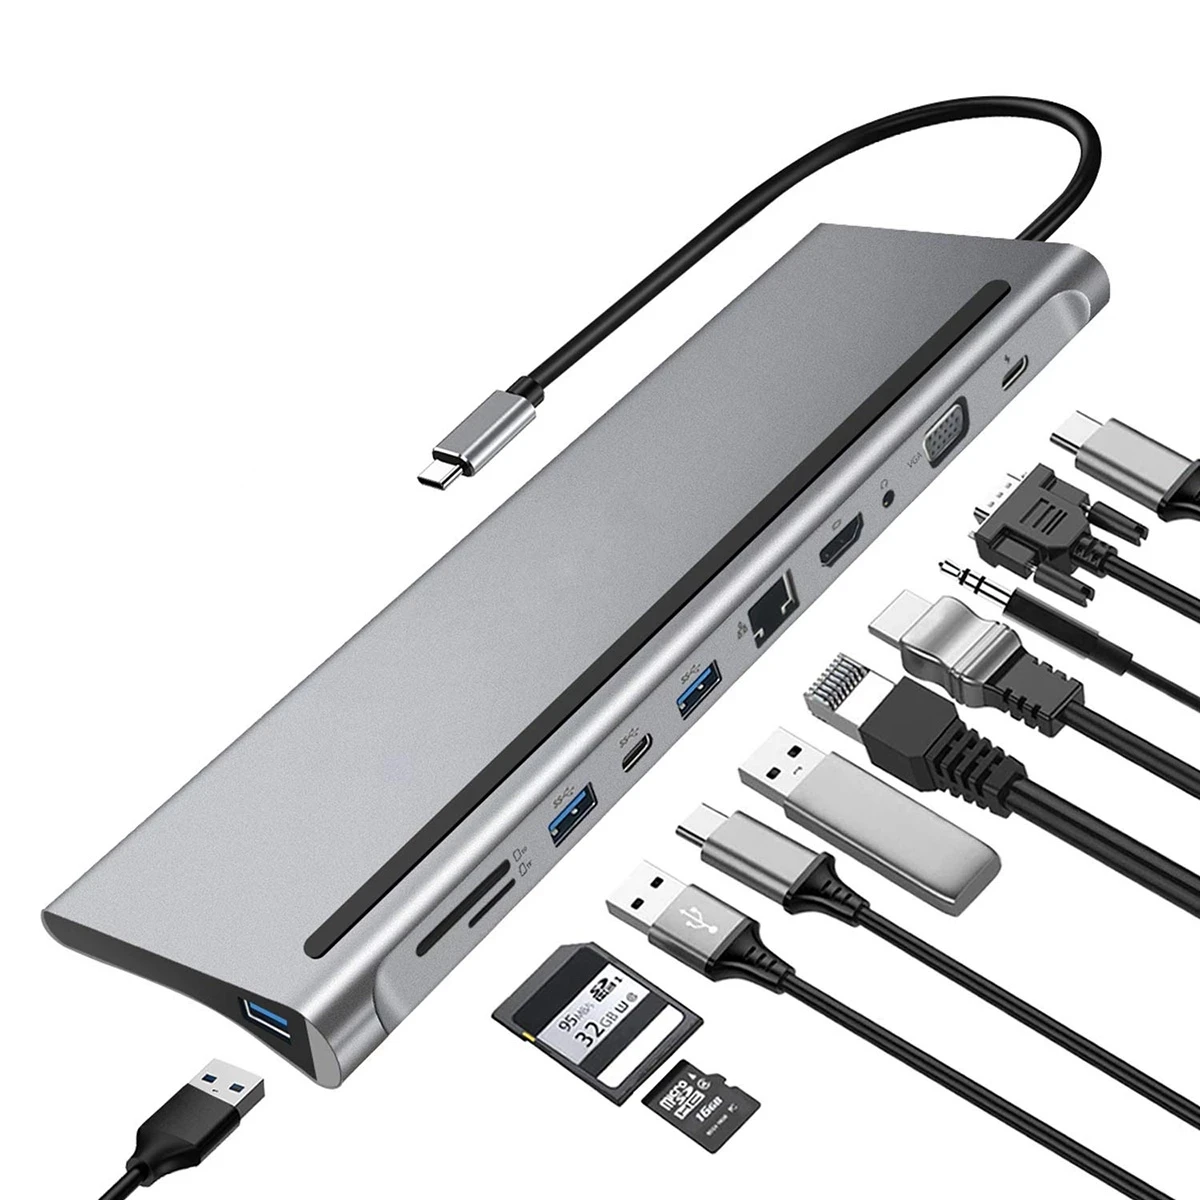 

USB C Hub 11 in 1 USB Type C Hub with Ethernet Port, 4K USB C to HDMI, VGA, USB 3.0 Ports, for MacBook Pro Air, Laptops